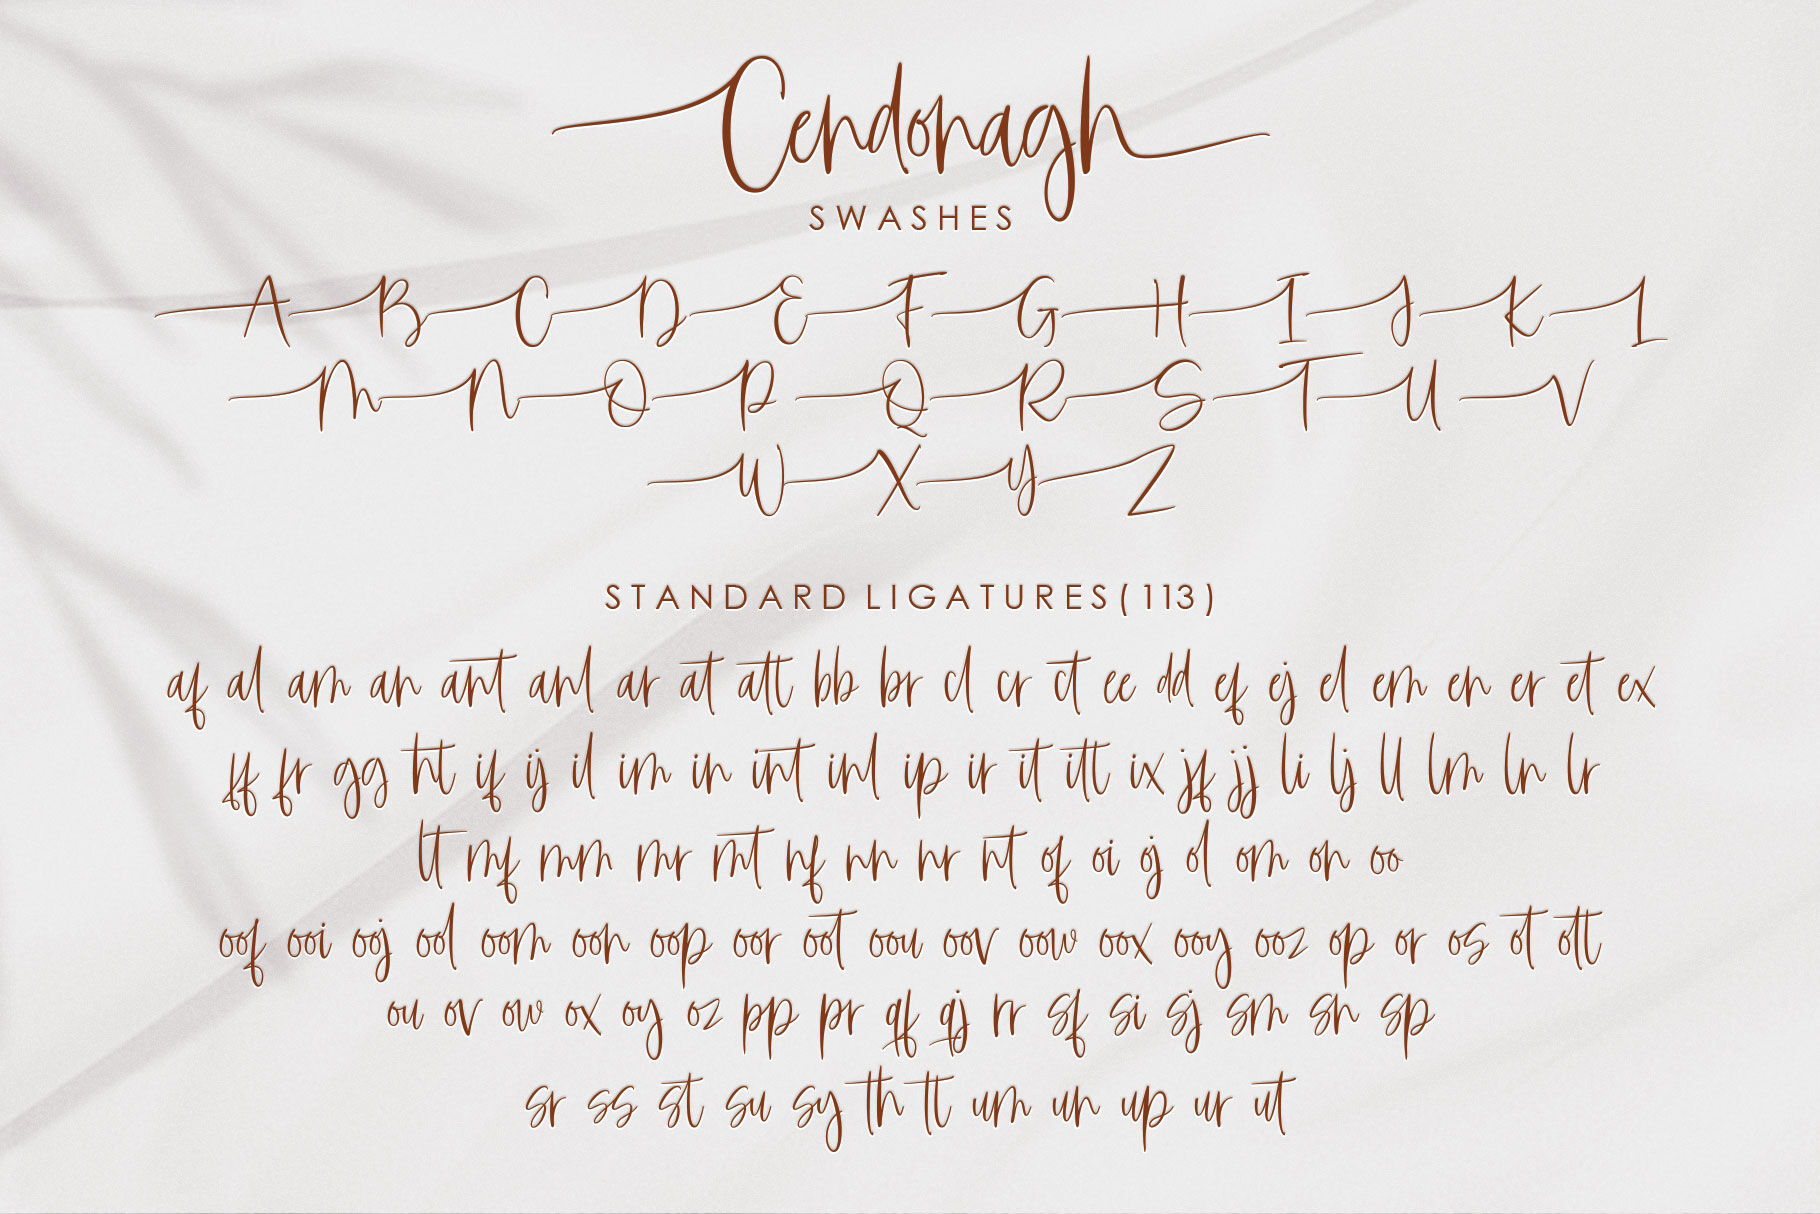 Cendonagh Script Font By Jhoeldesign Thehungryjpeg Com